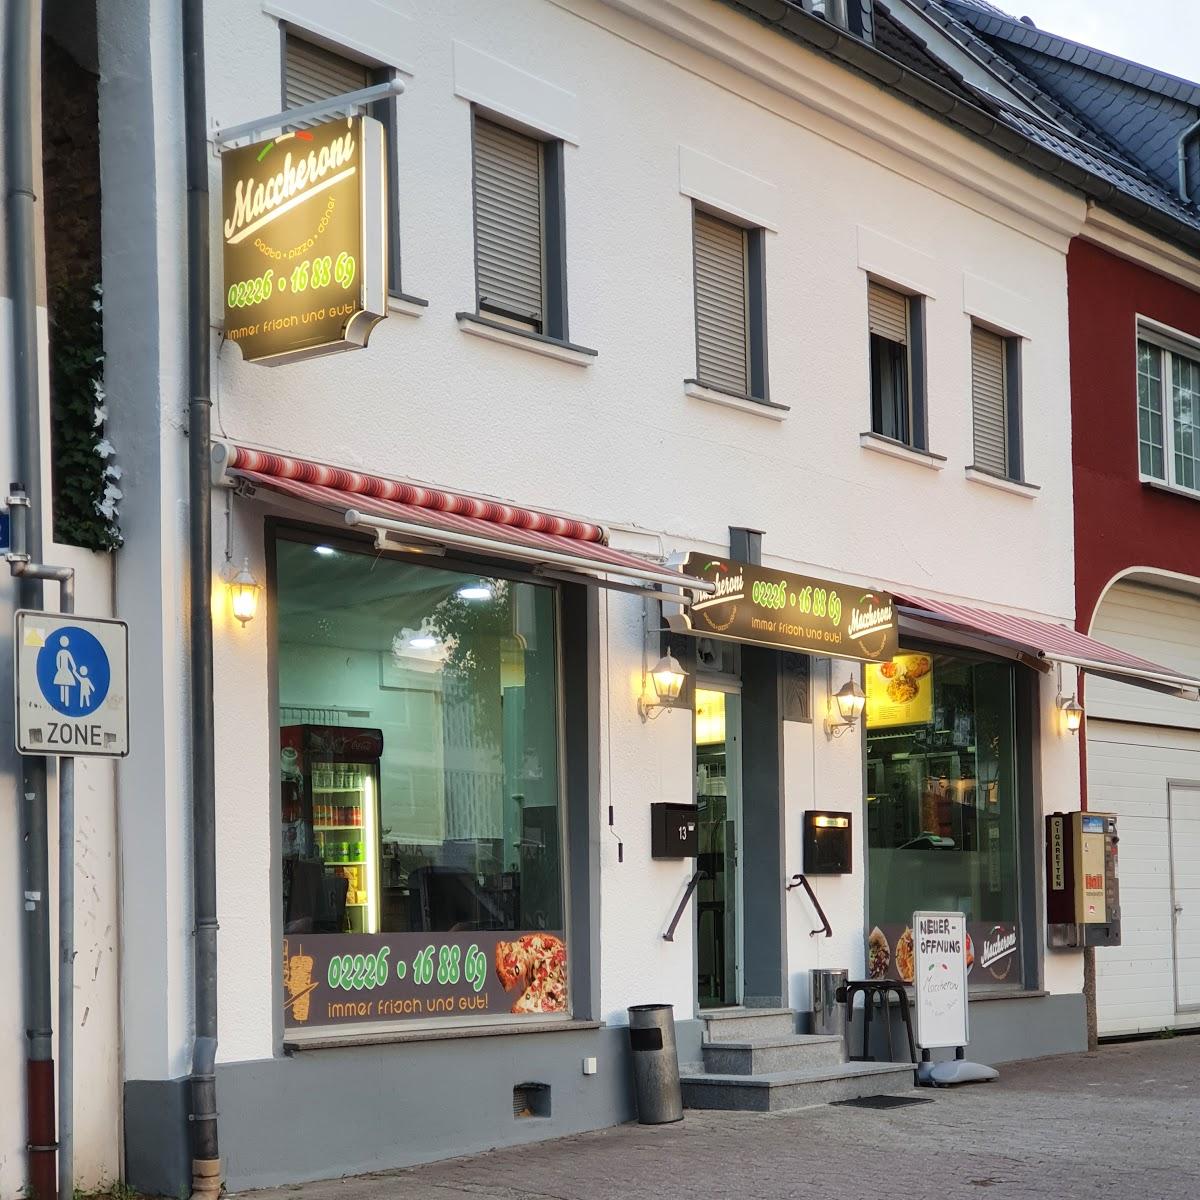 Restaurant "maccheroni döner pizza pasta" in Rheinbach